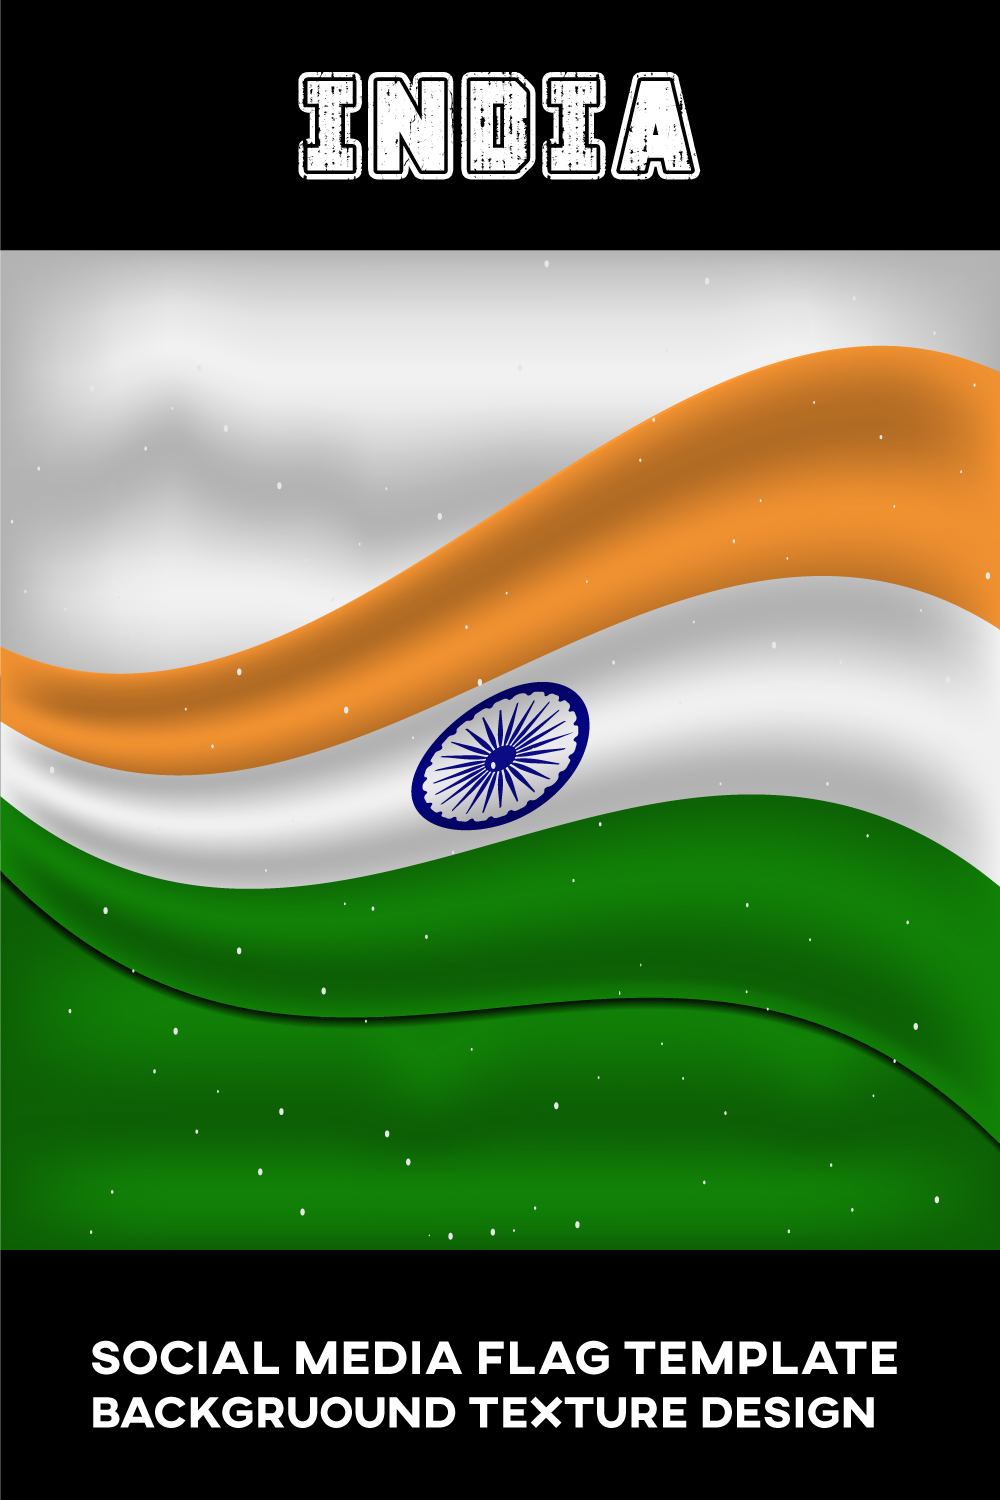 Irresistible flag image of India.